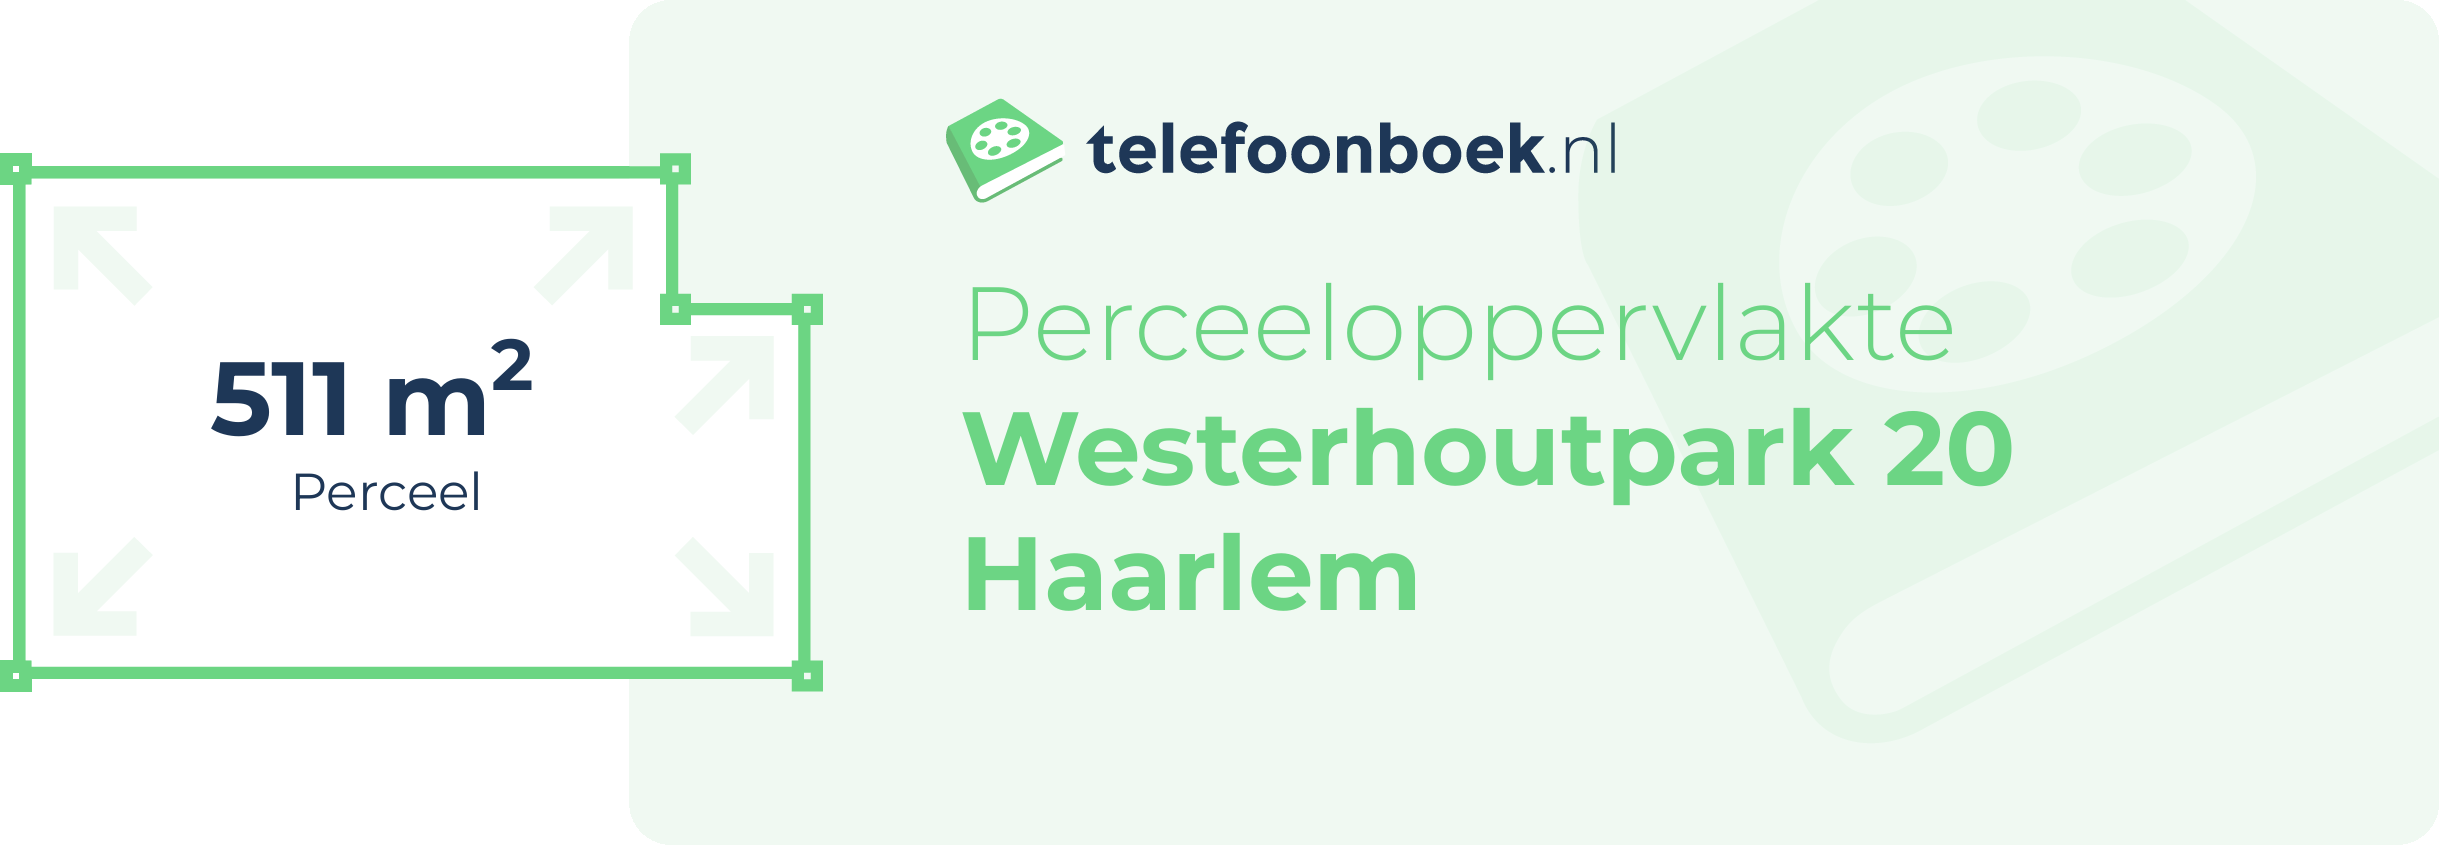 Perceeloppervlakte Westerhoutpark 20 Haarlem